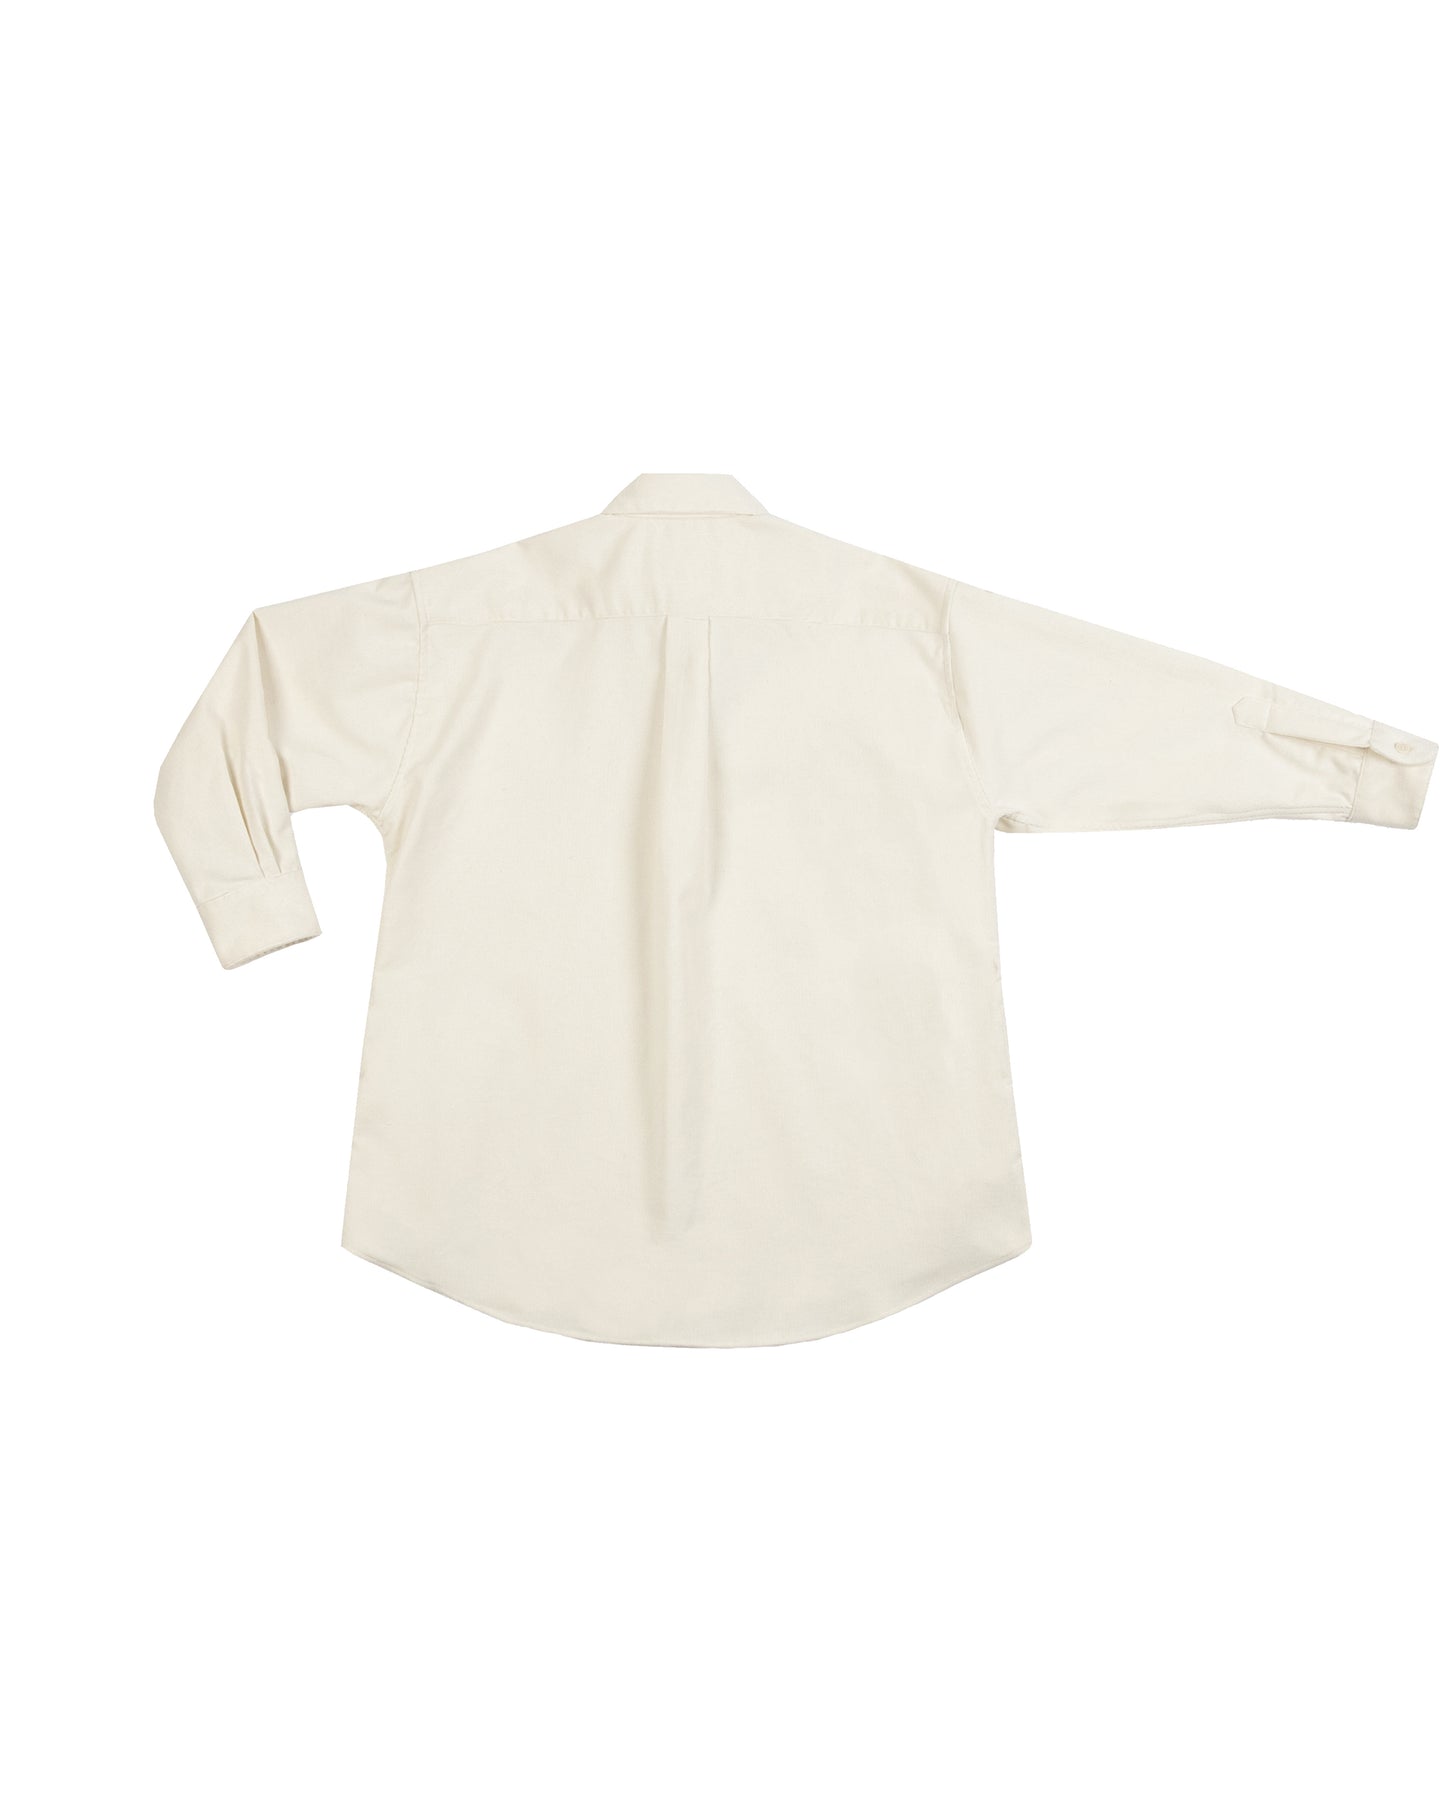 Oz Shirt - Bone - Cotton Corduroy